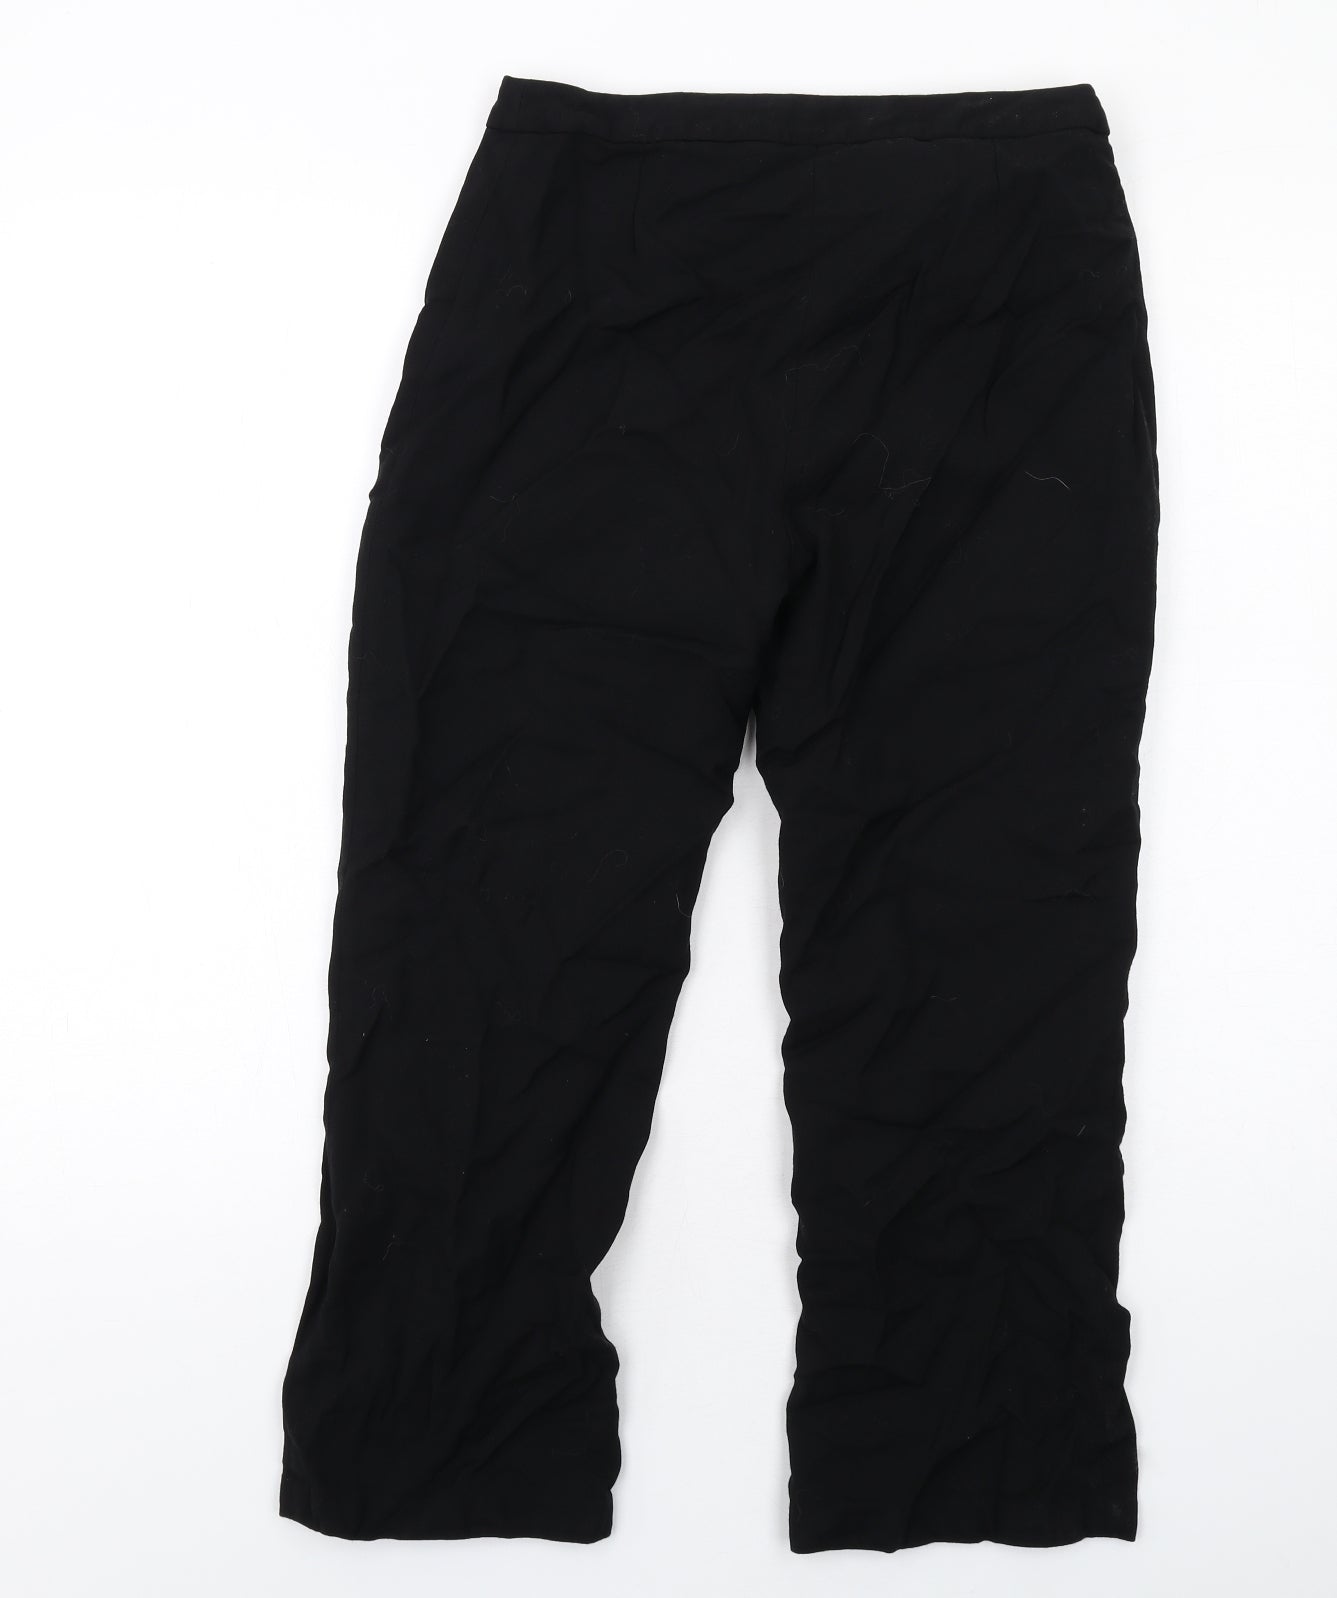 Boden Womens Black Viscose Trousers Size 12 L25 in Regular Zip